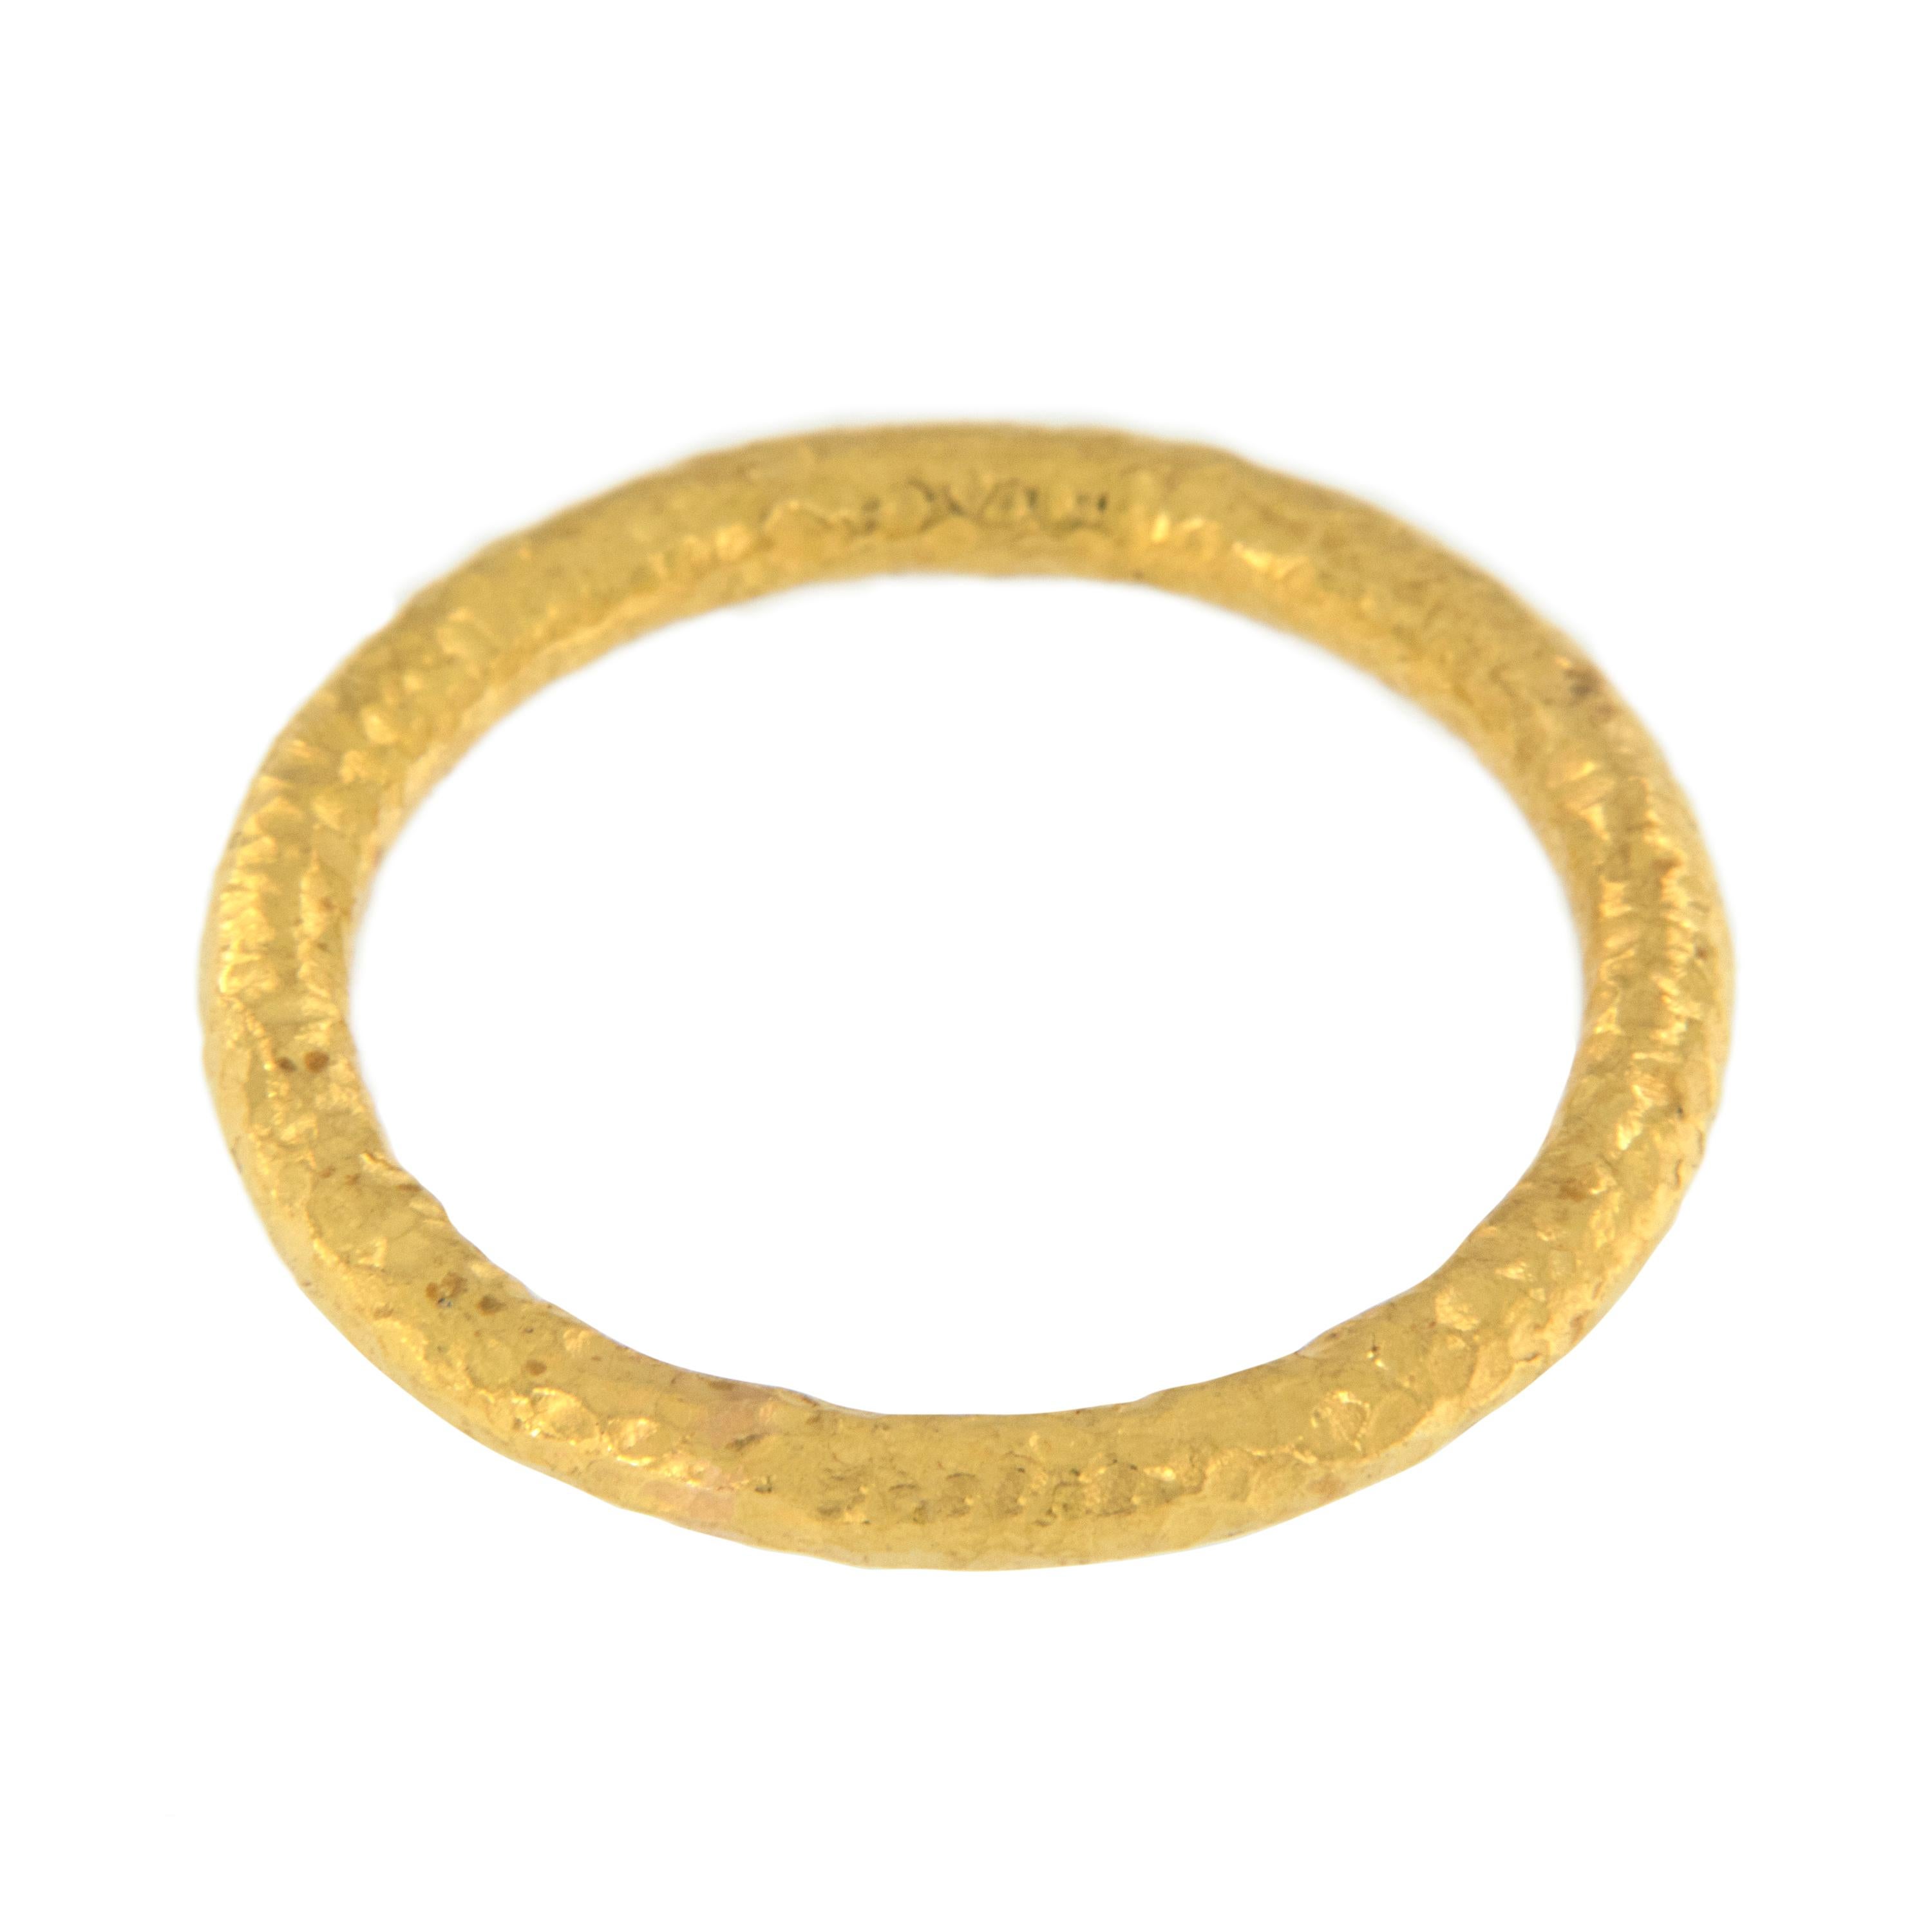 Pure 24 Karat Yellow Gold Band Ring